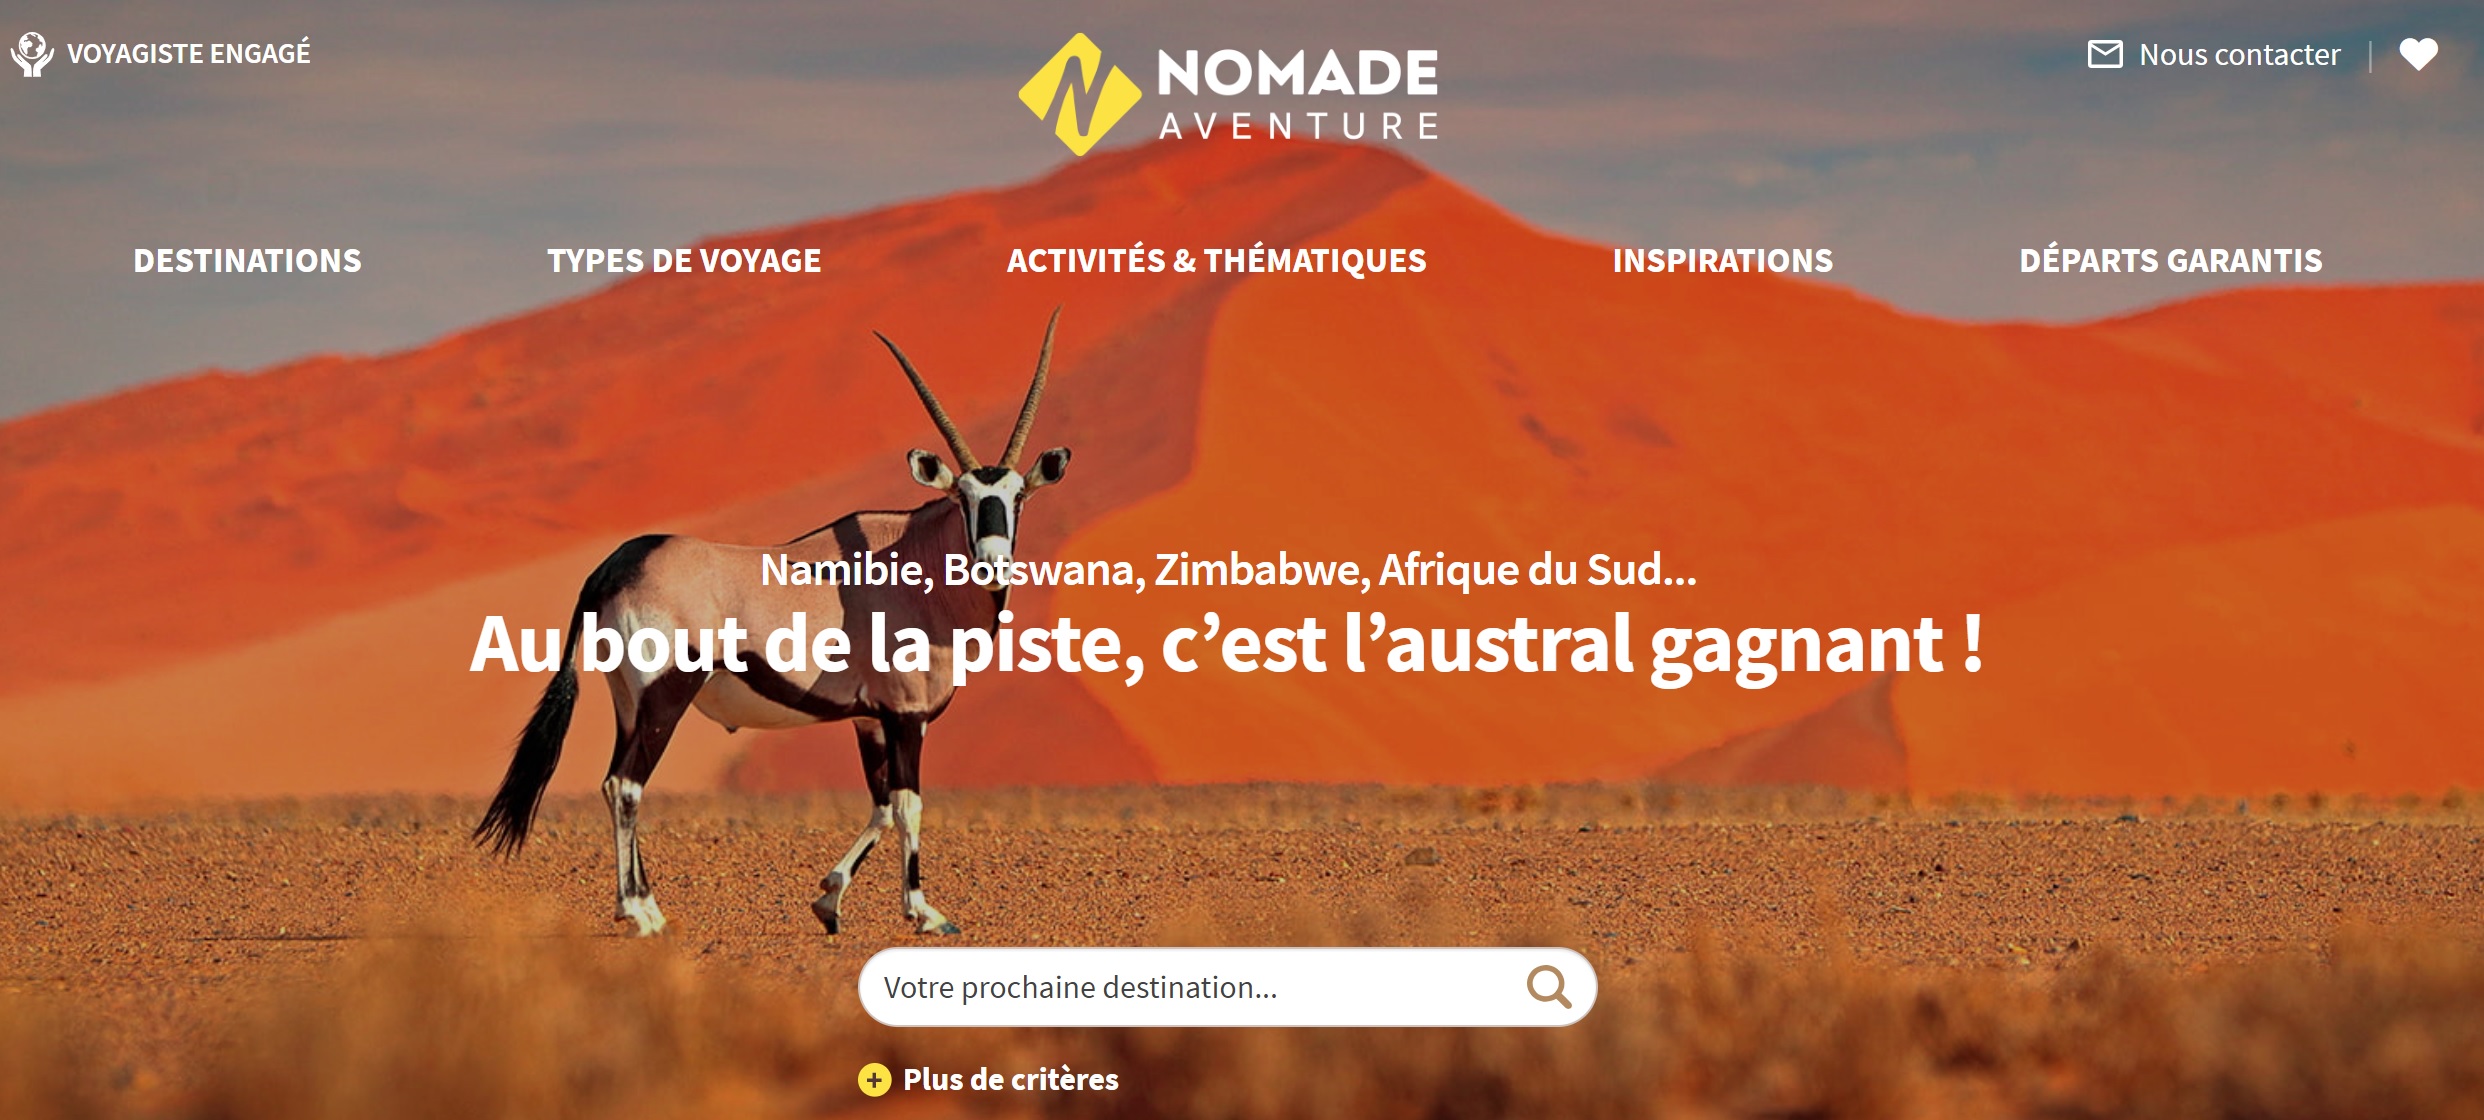 nomade-aventure